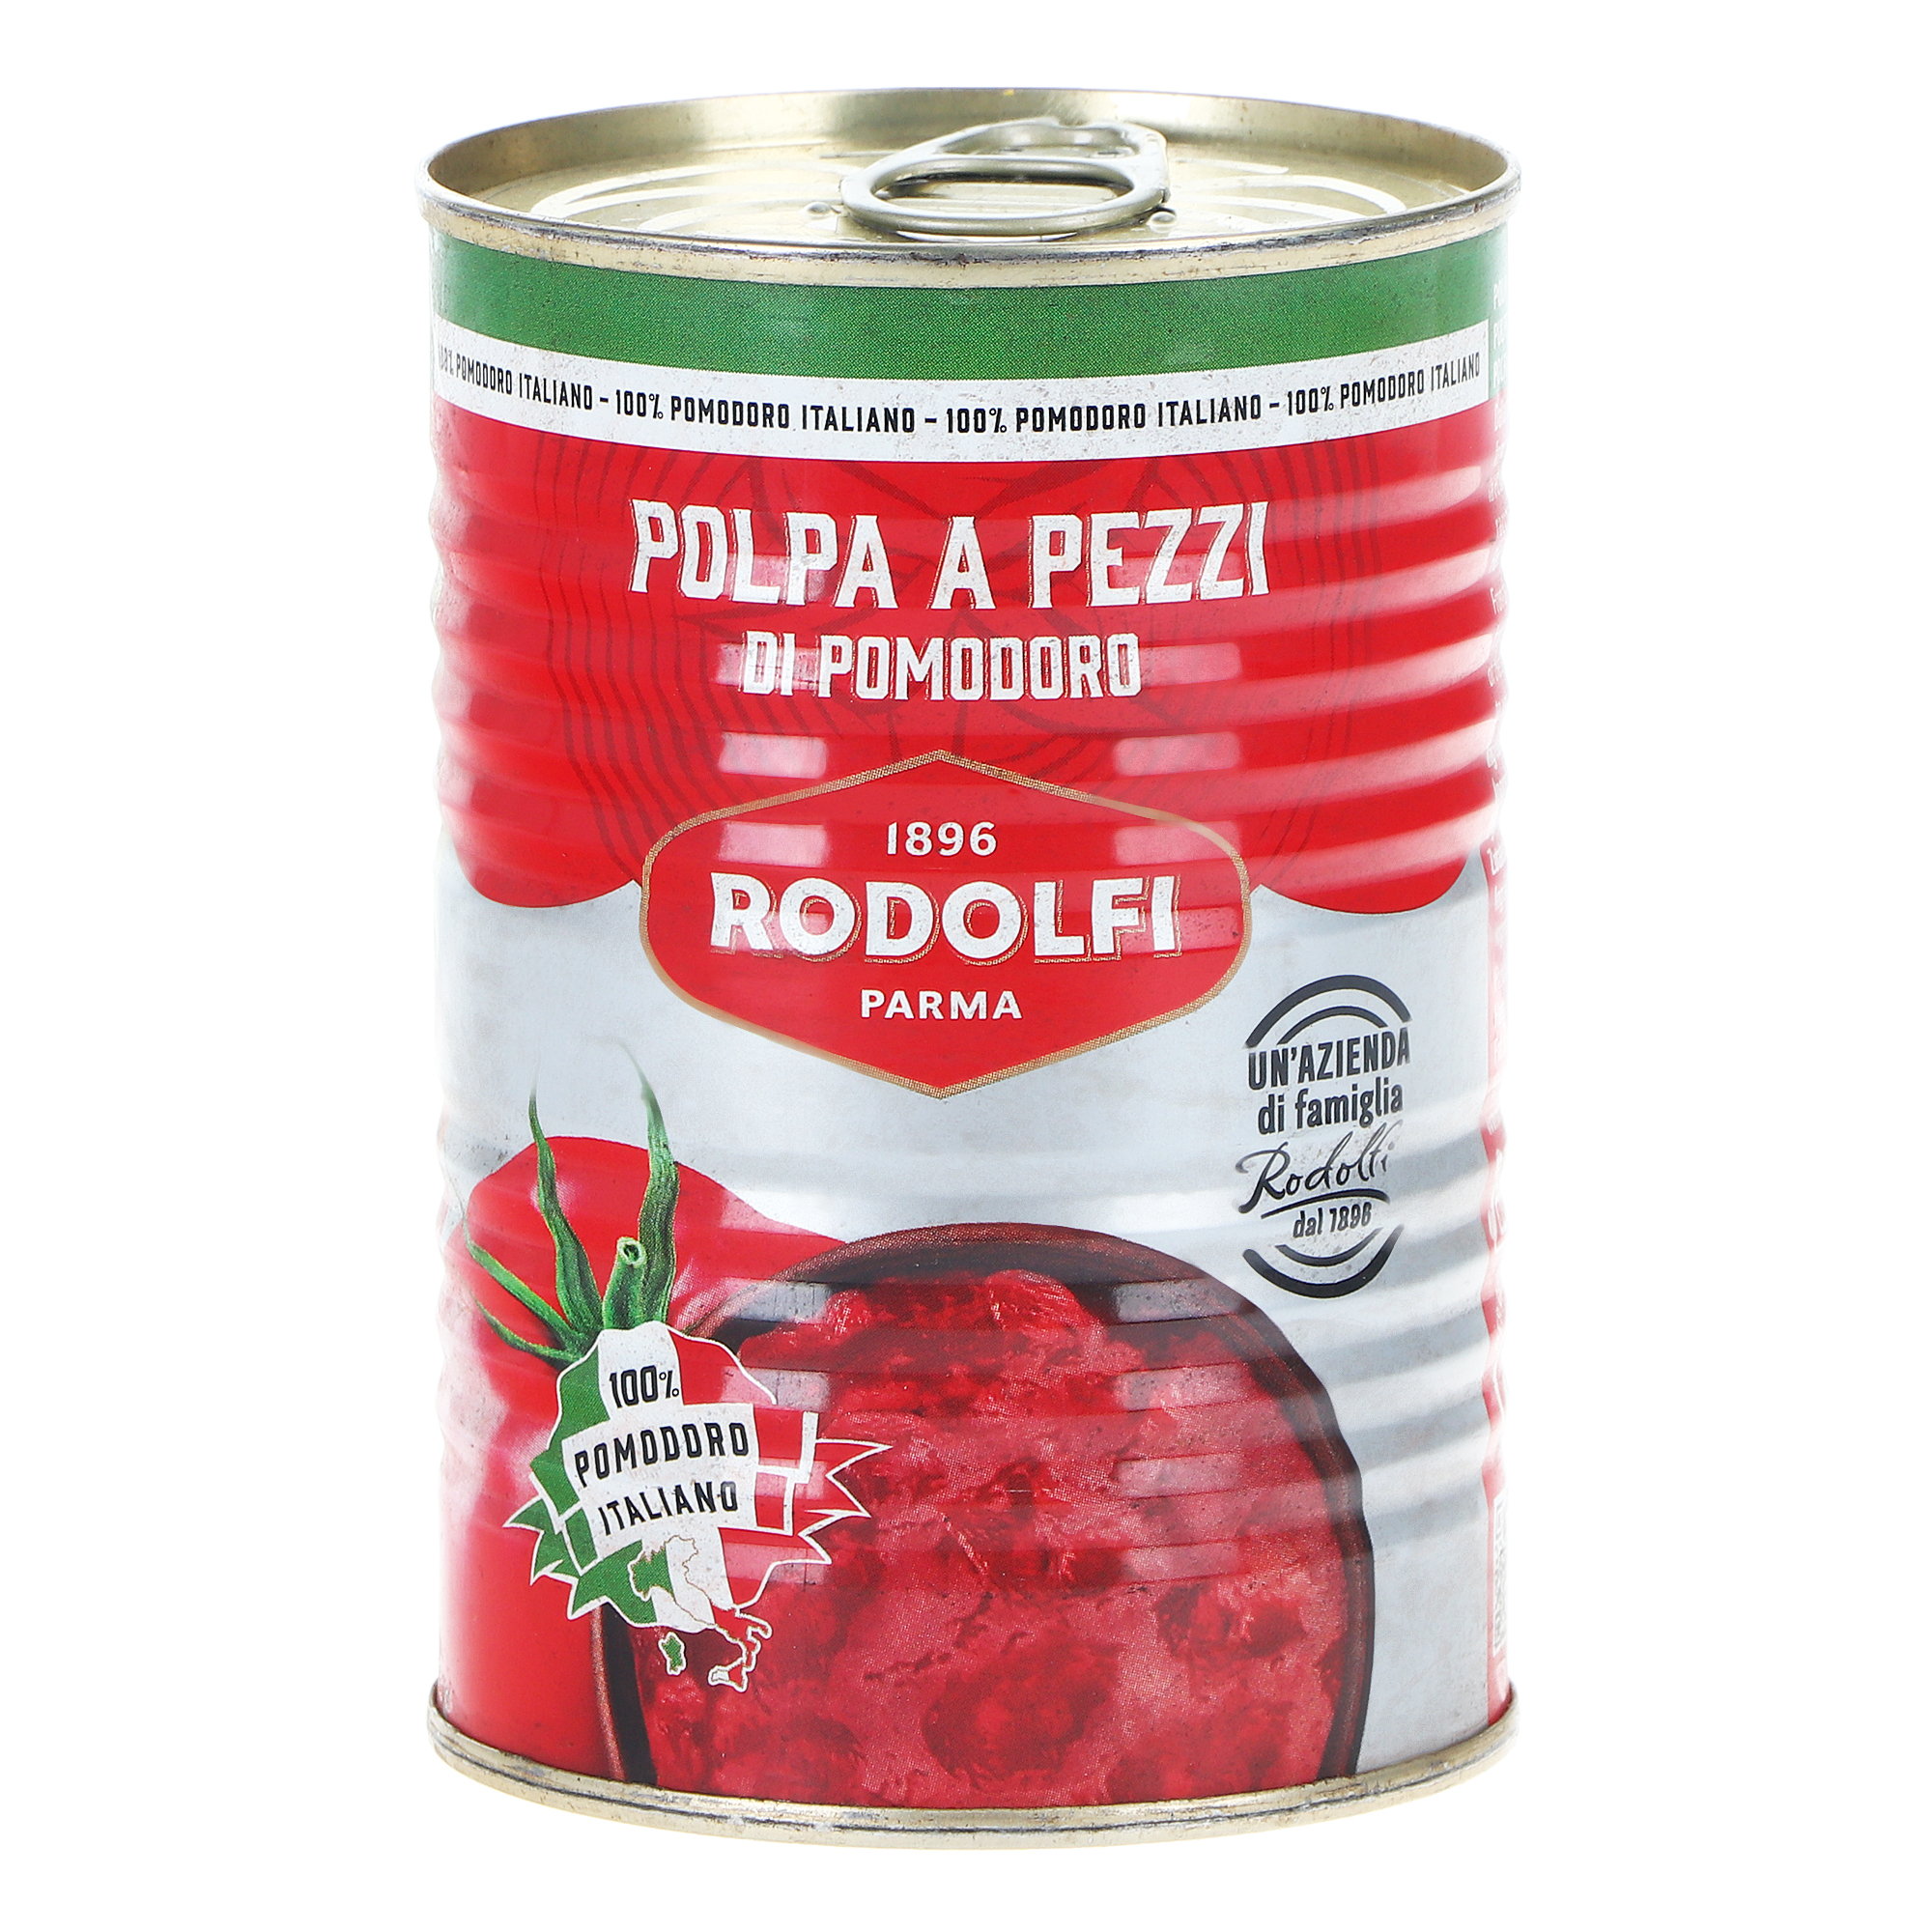 Томаты Rodolfi резаные очищенные, 400 г томаты зеленый стандарт капрезетто 600 гр